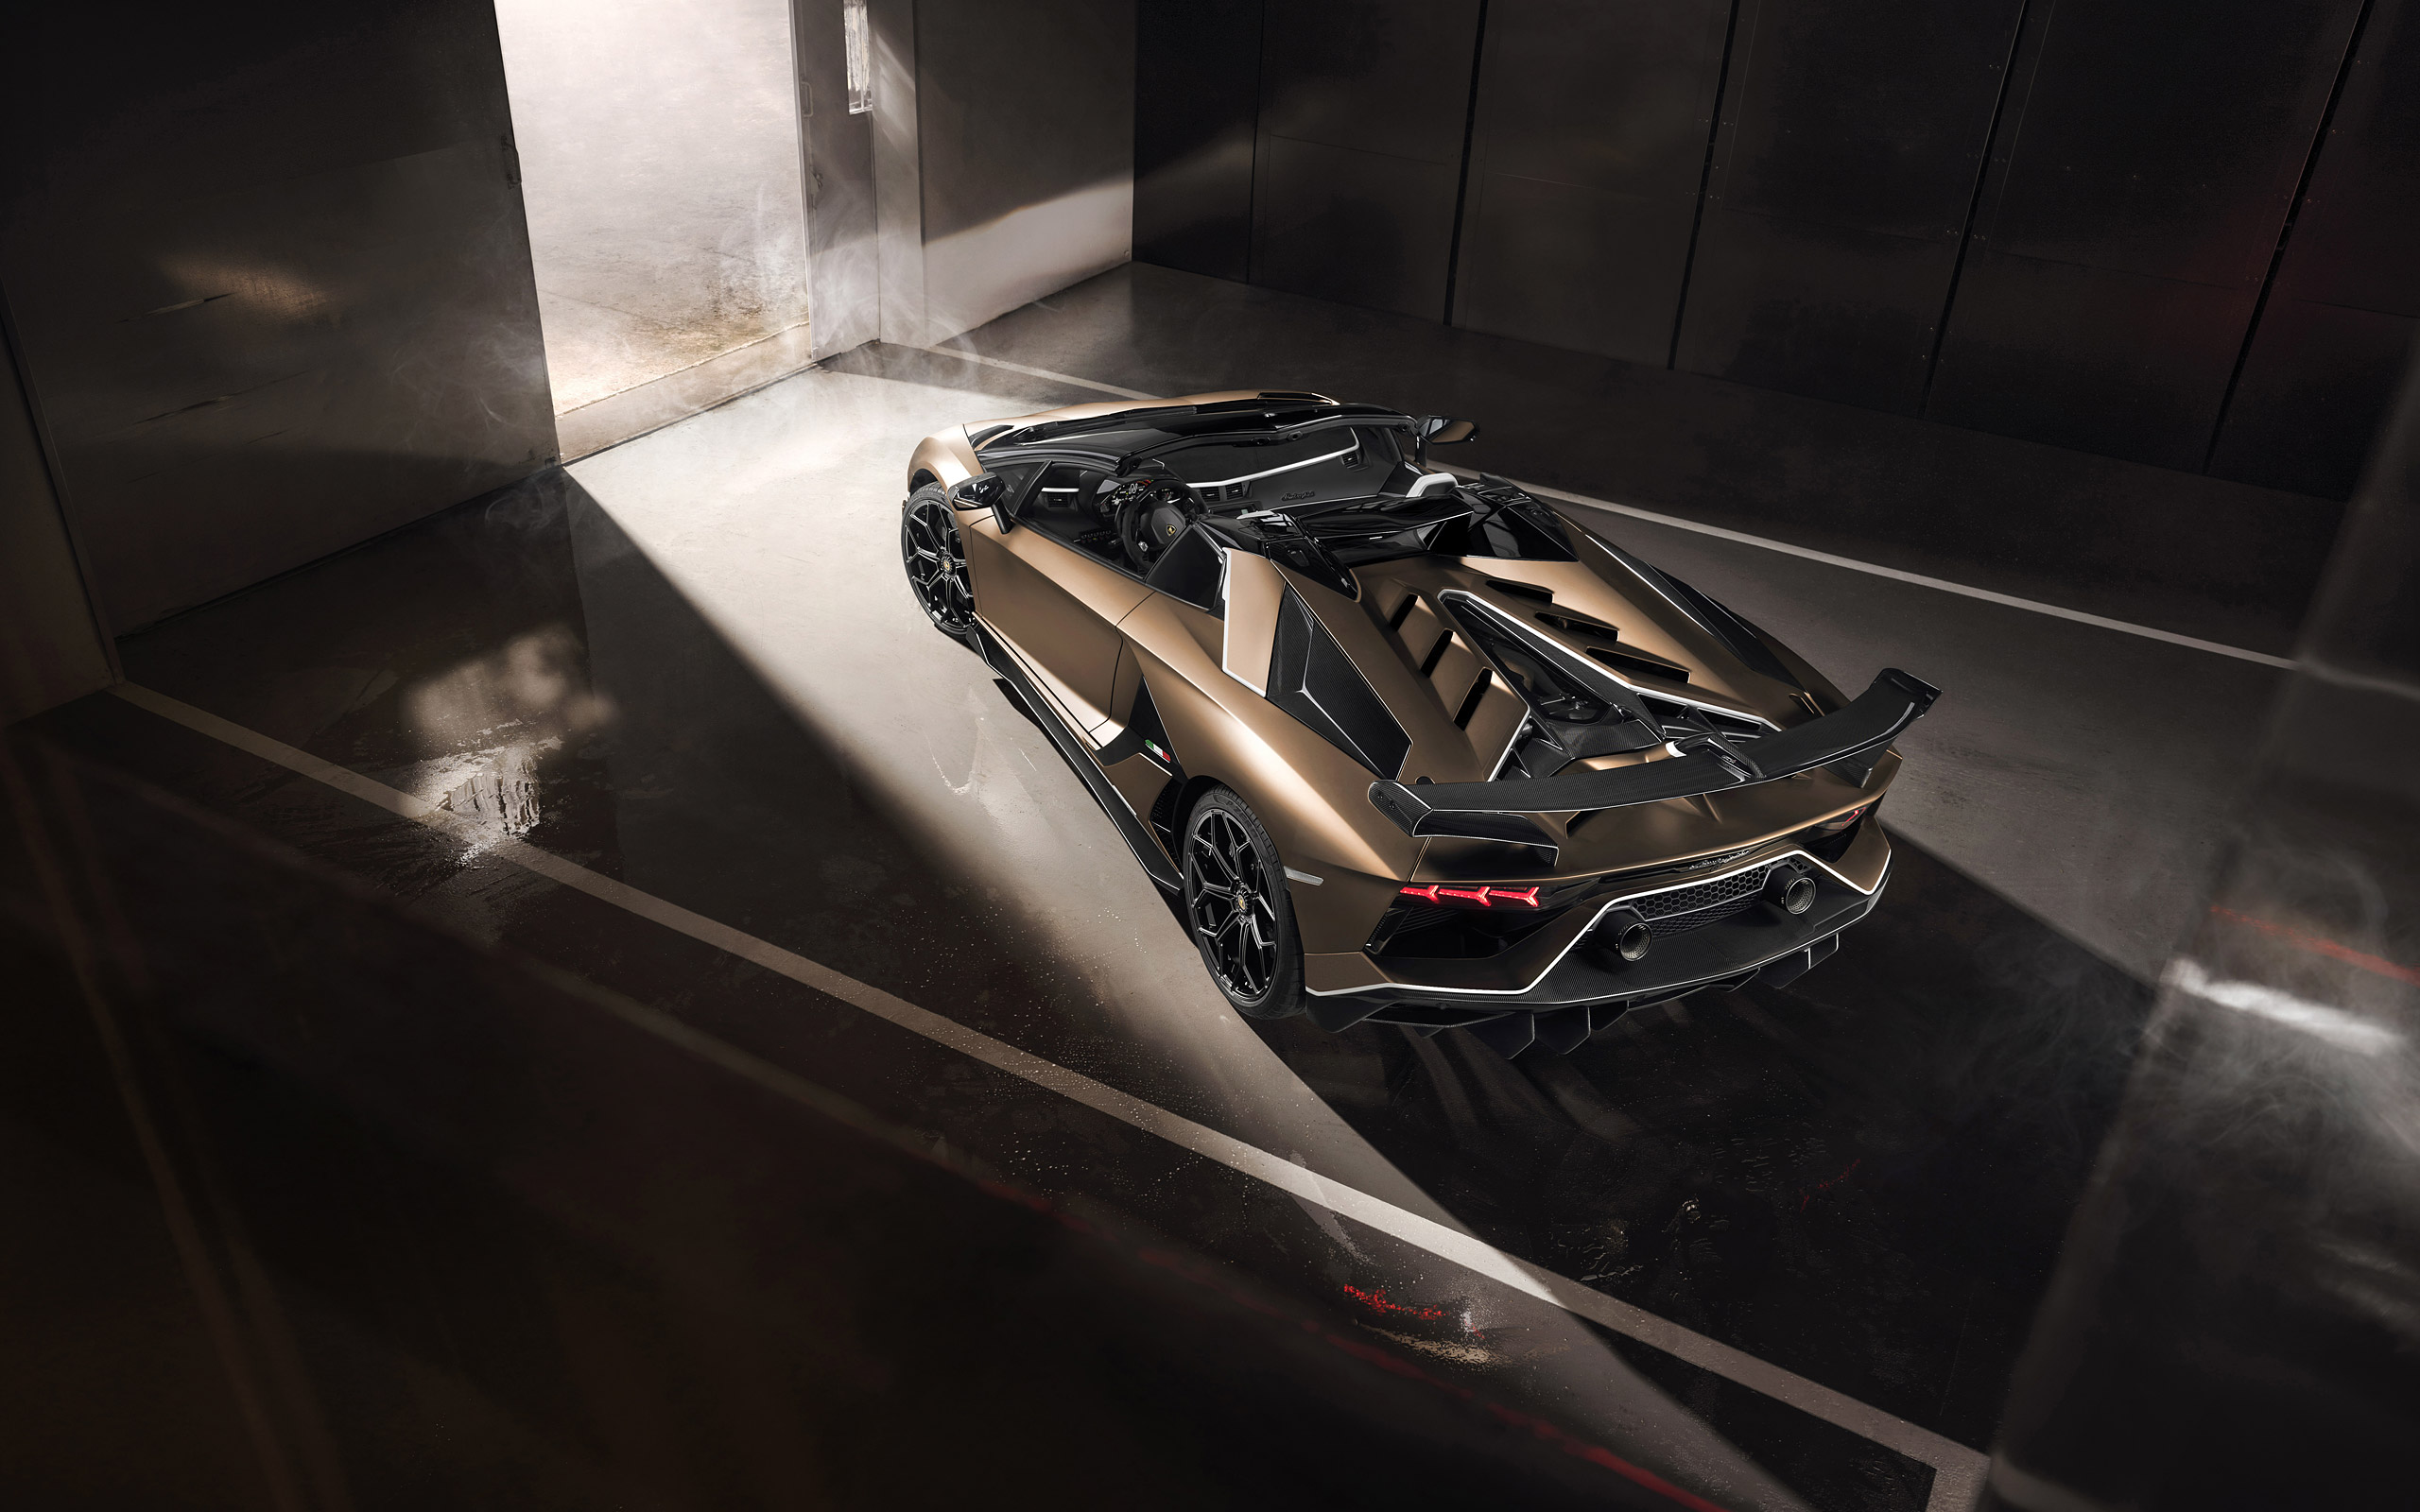  2020 Lamborghini Aventador SVJ Roadster Wallpaper.